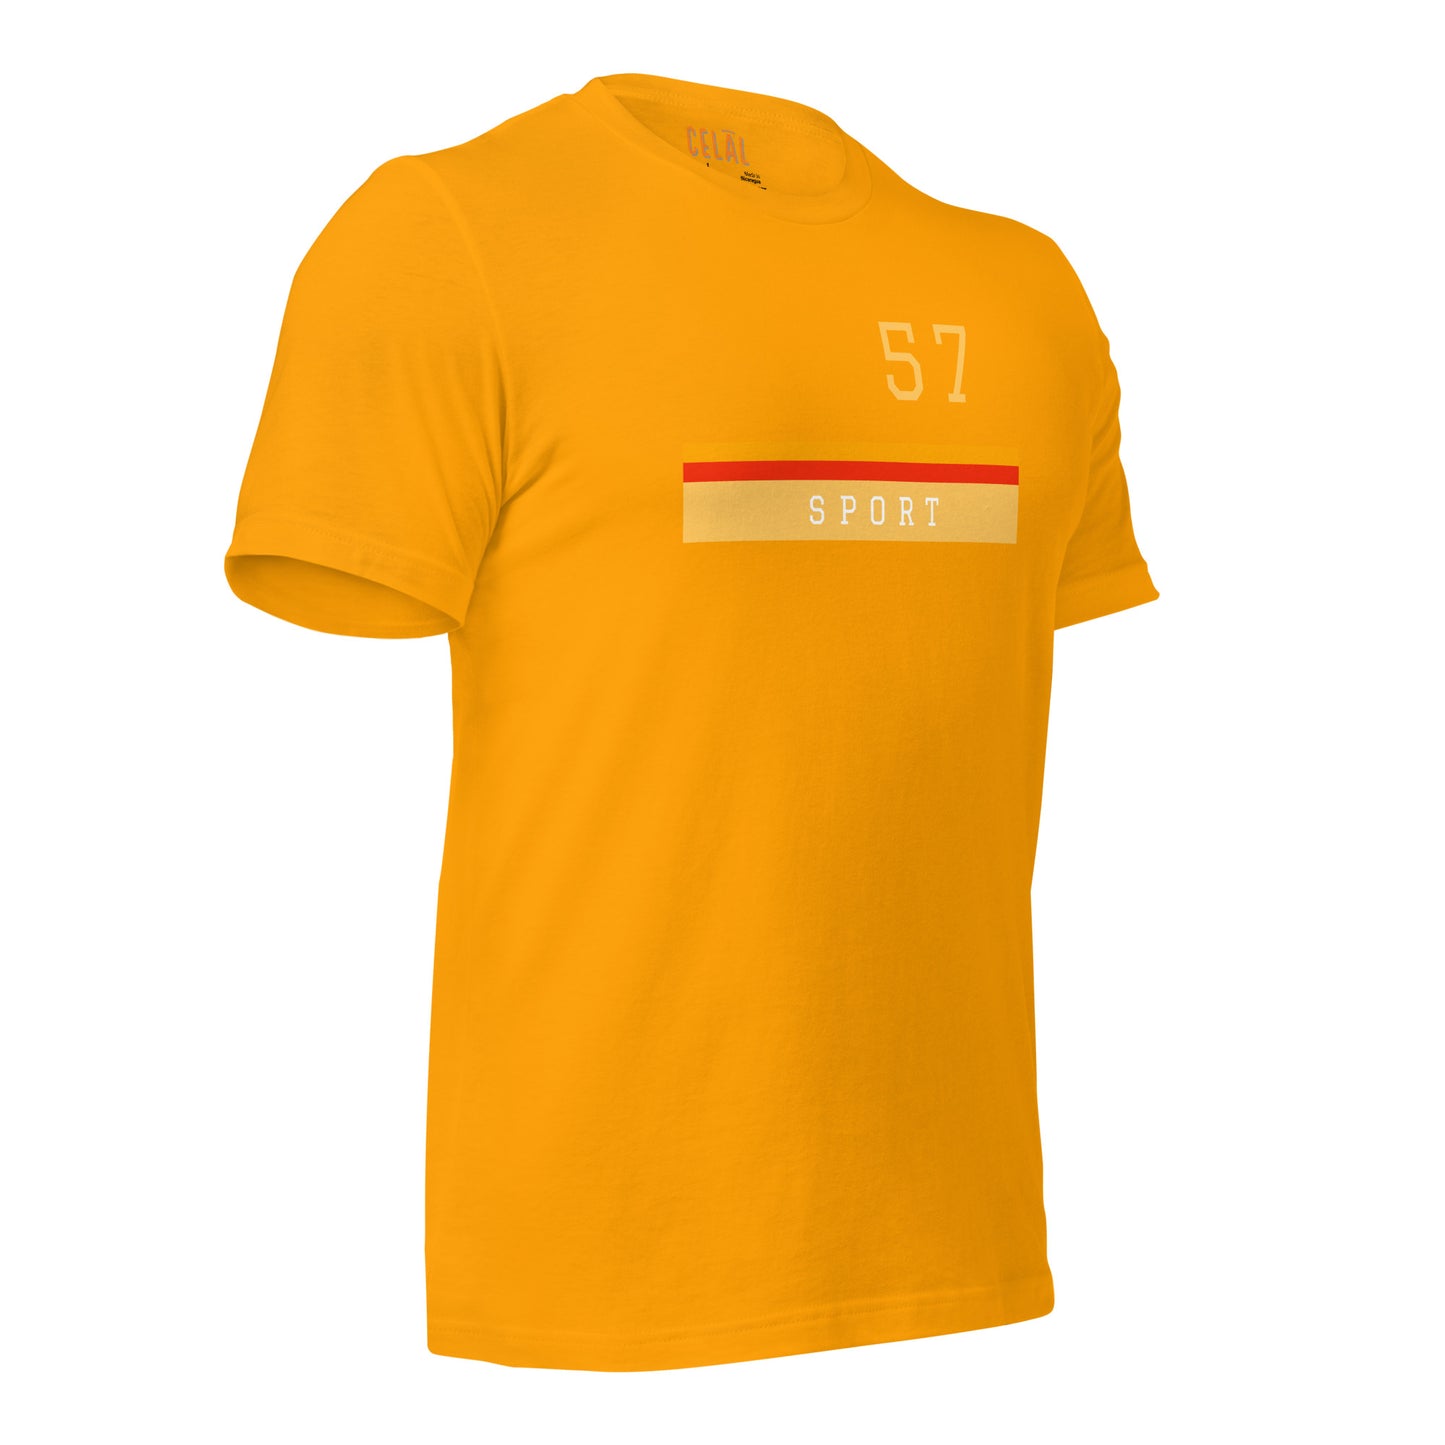 57 Unisex t-shirt